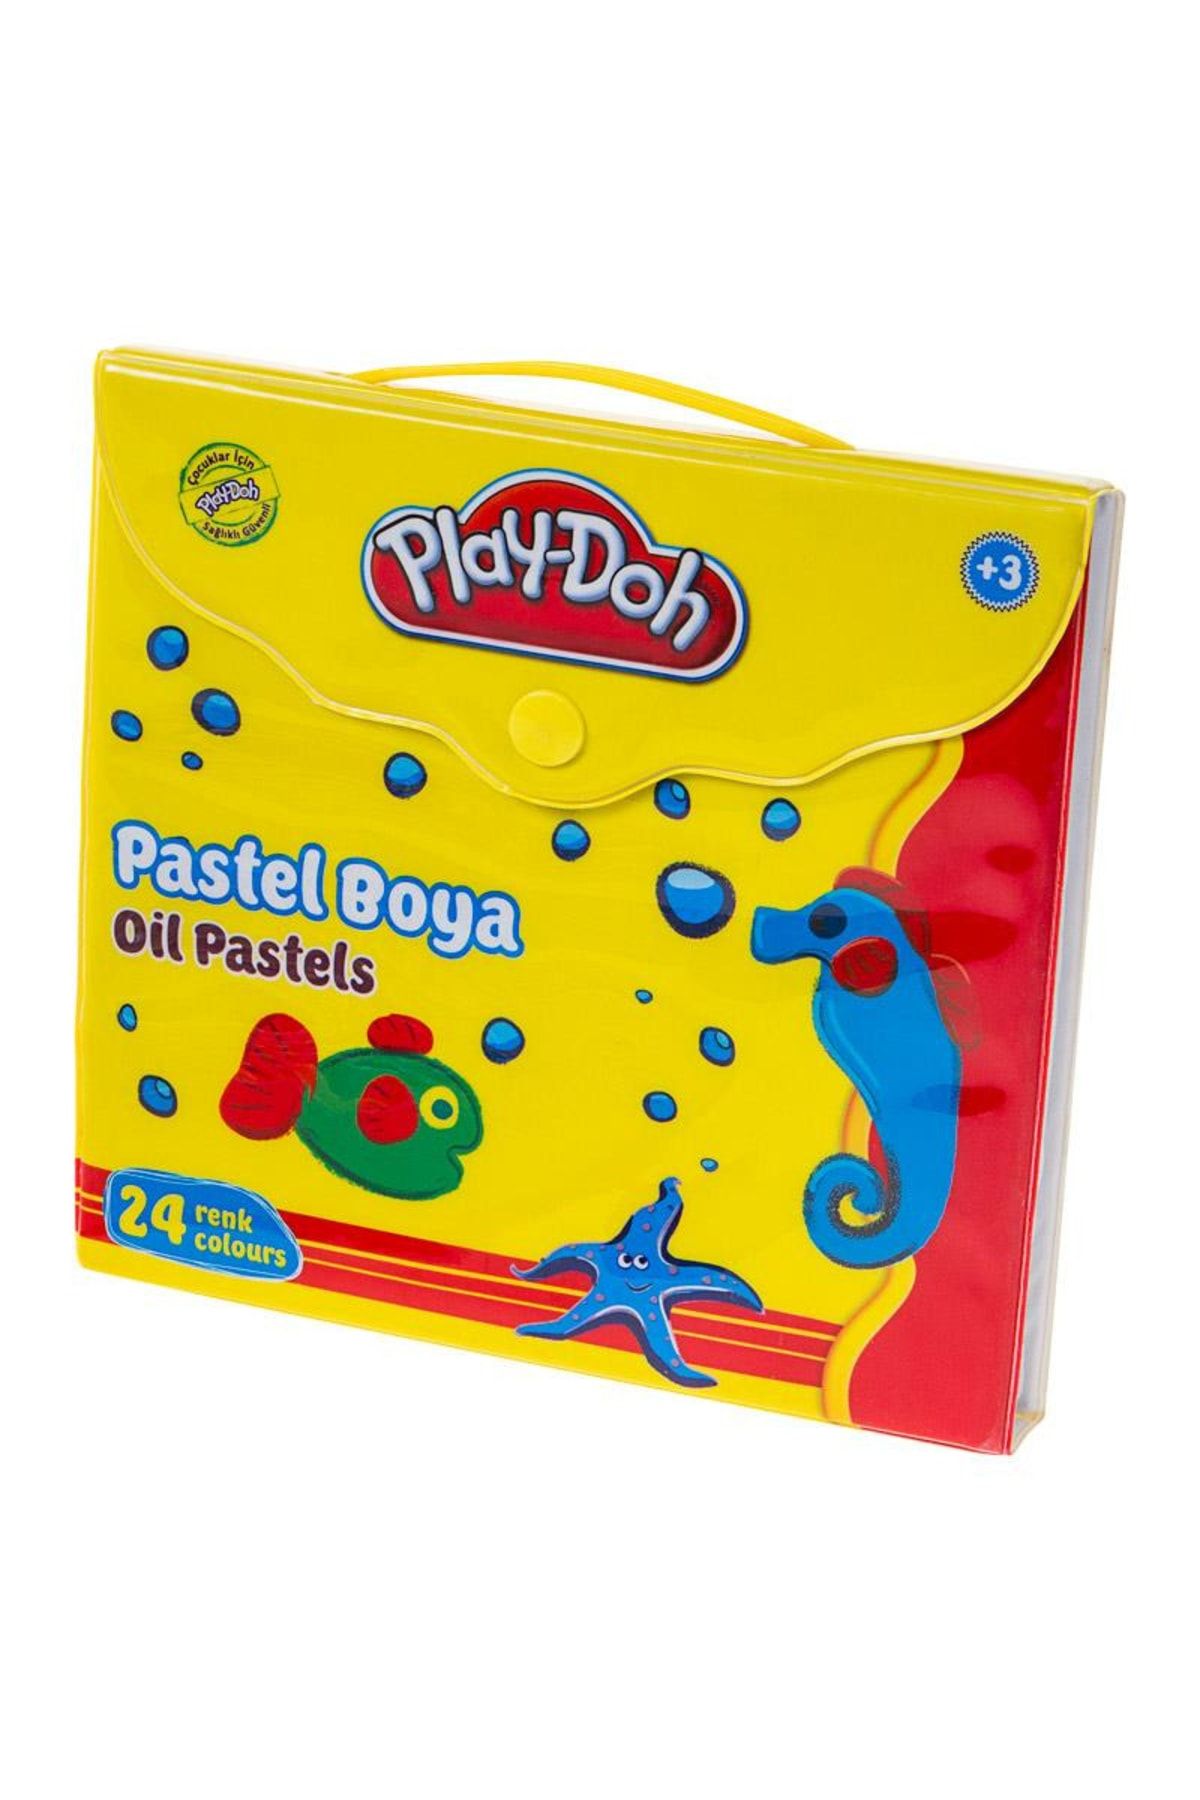 Play Doh Play-doh Pastel Boya Çantalı 24 Renk